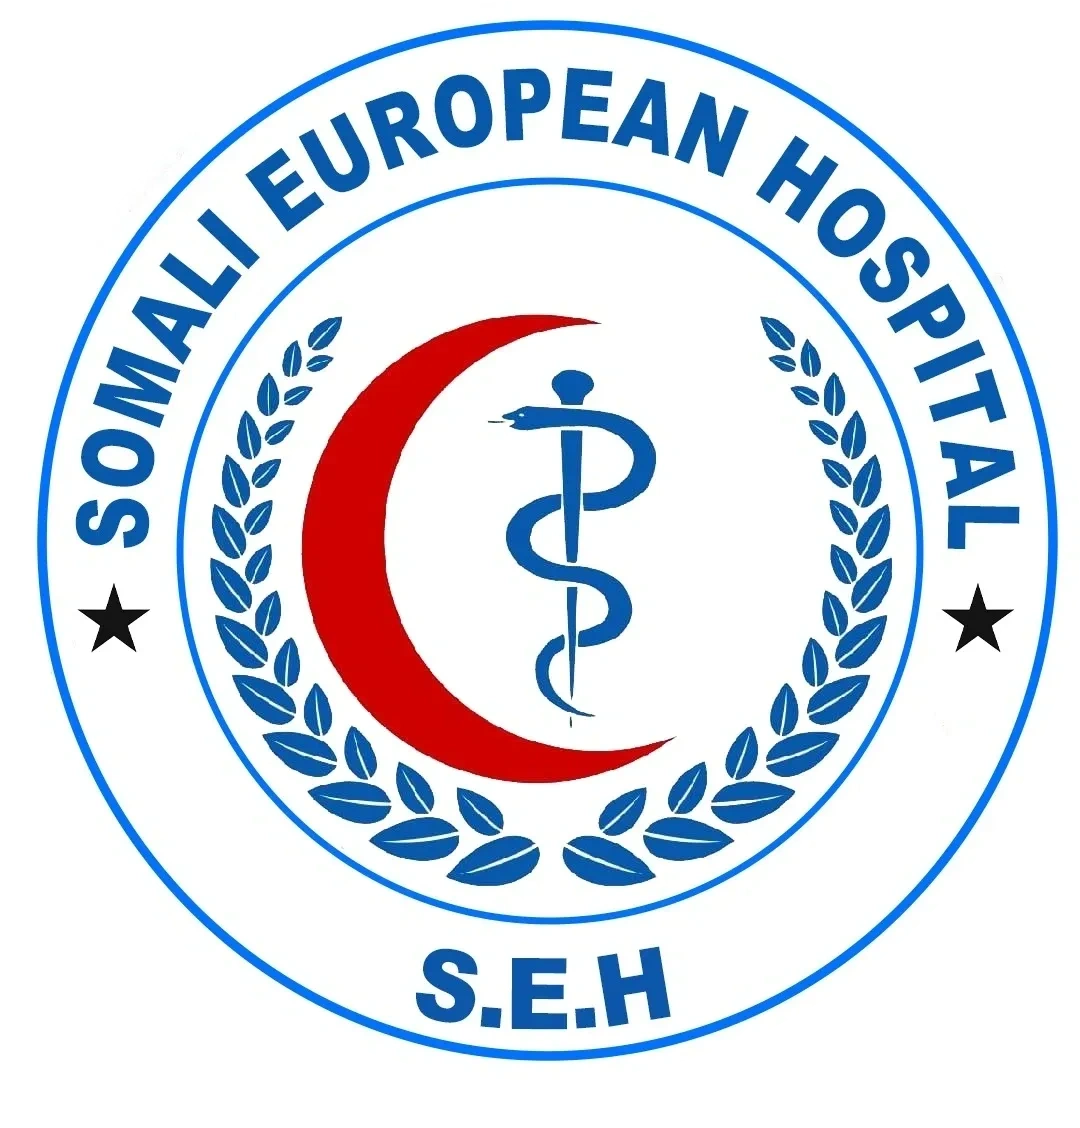 Somali European Hospital